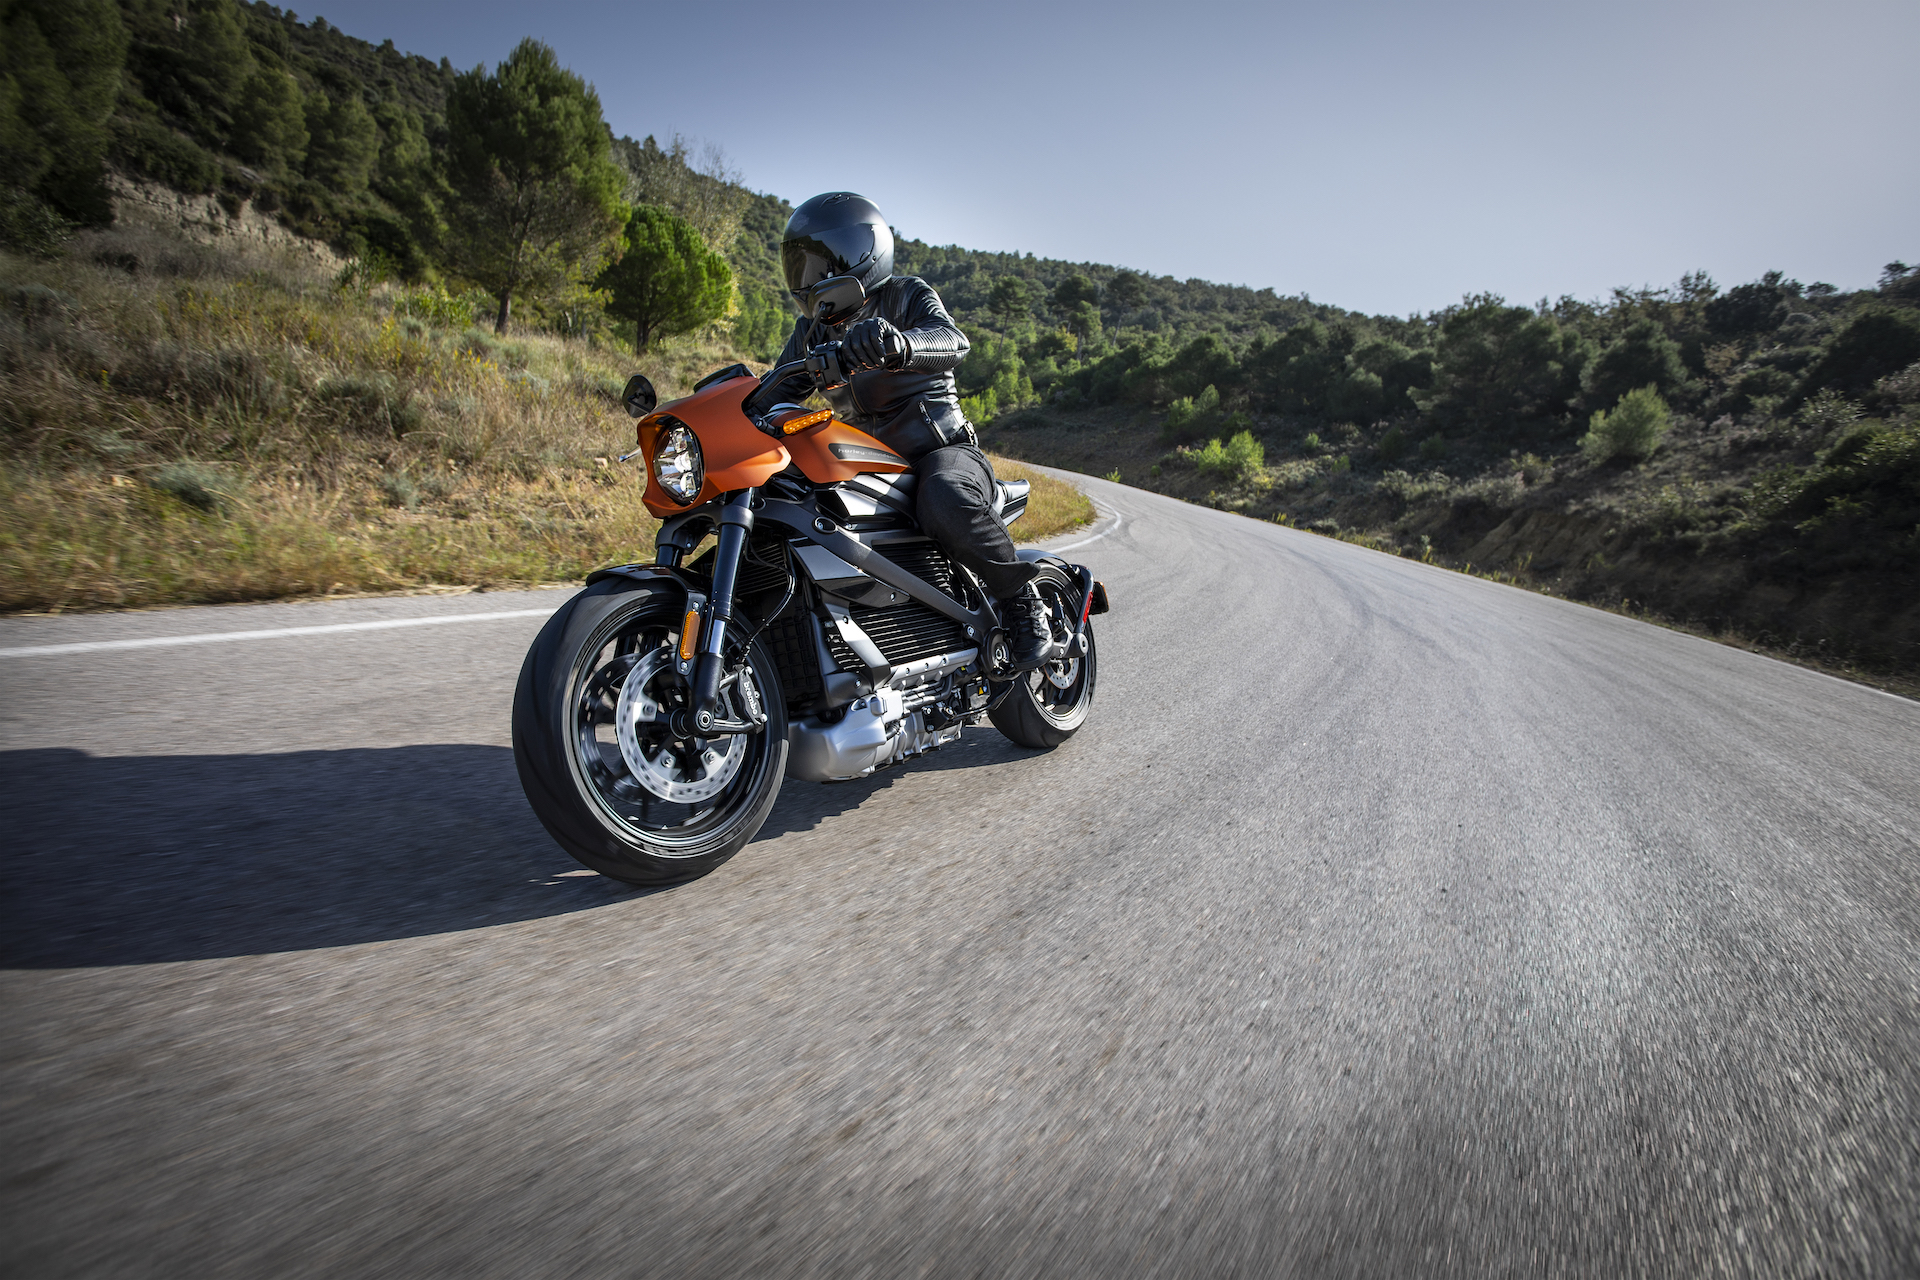 Harley-Davidson Livewire electric motorcycle range, performance specs